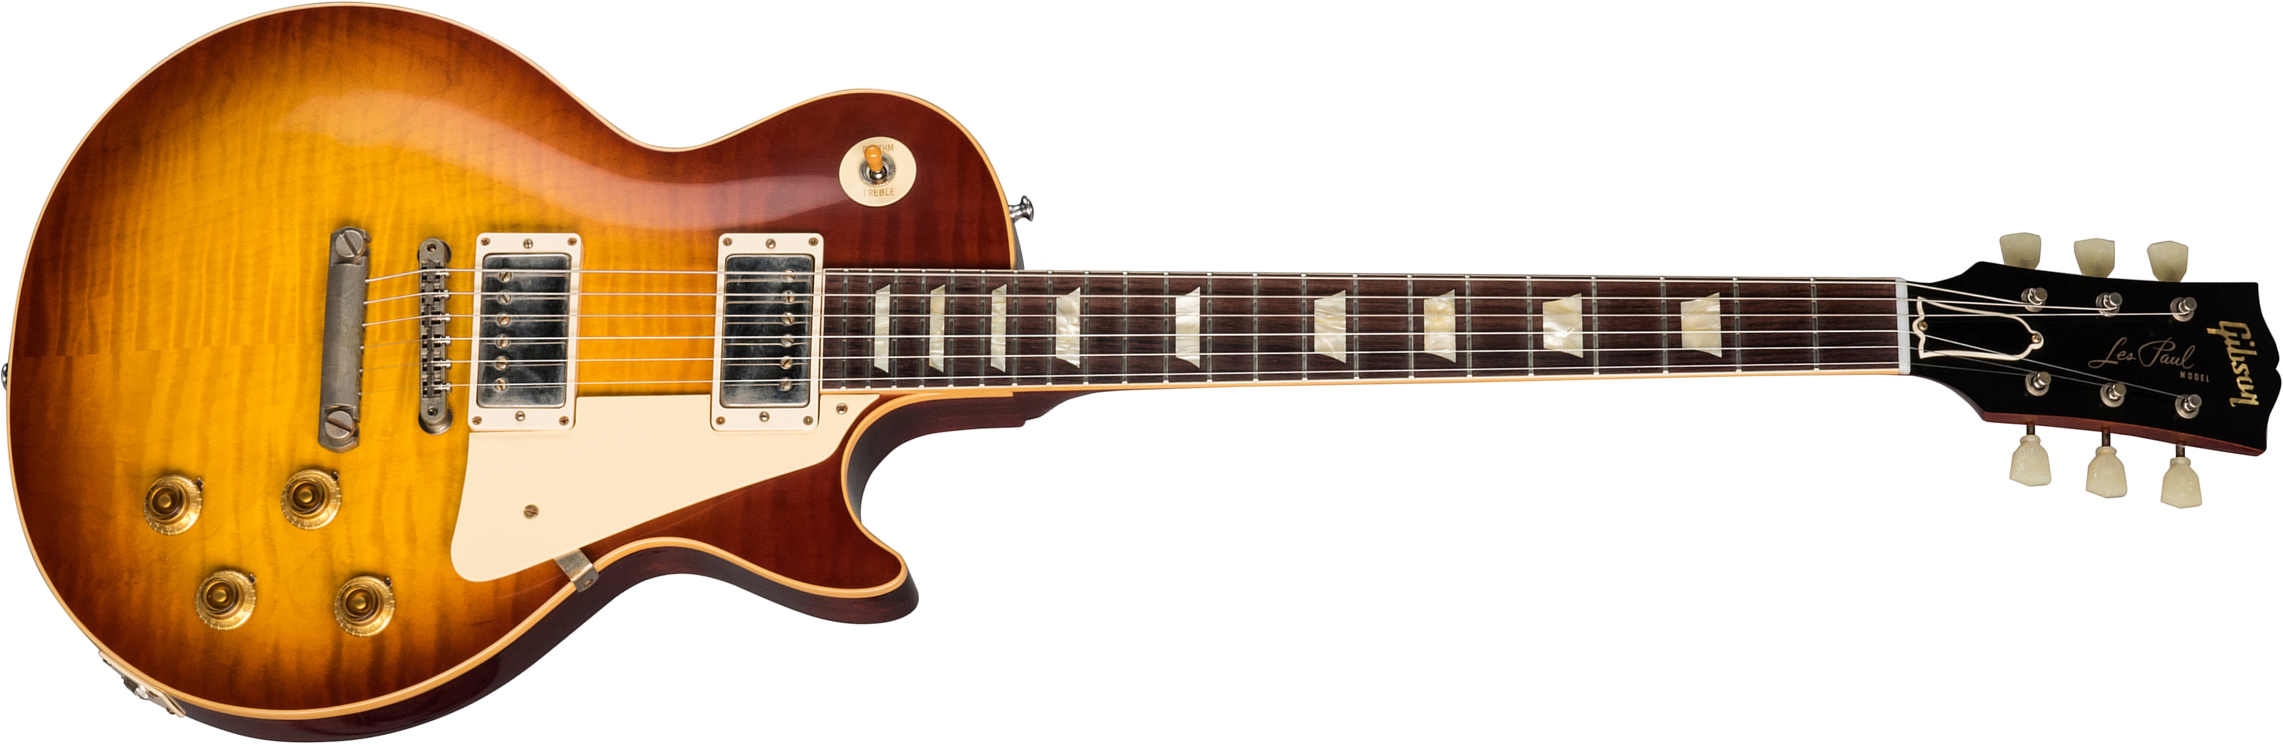 Gibson Custom Shop Les Paul Standard 1959 60th Anniversary Indian Rw - Vos Cherry Teaburst - Single cut electric guitar - Main picture